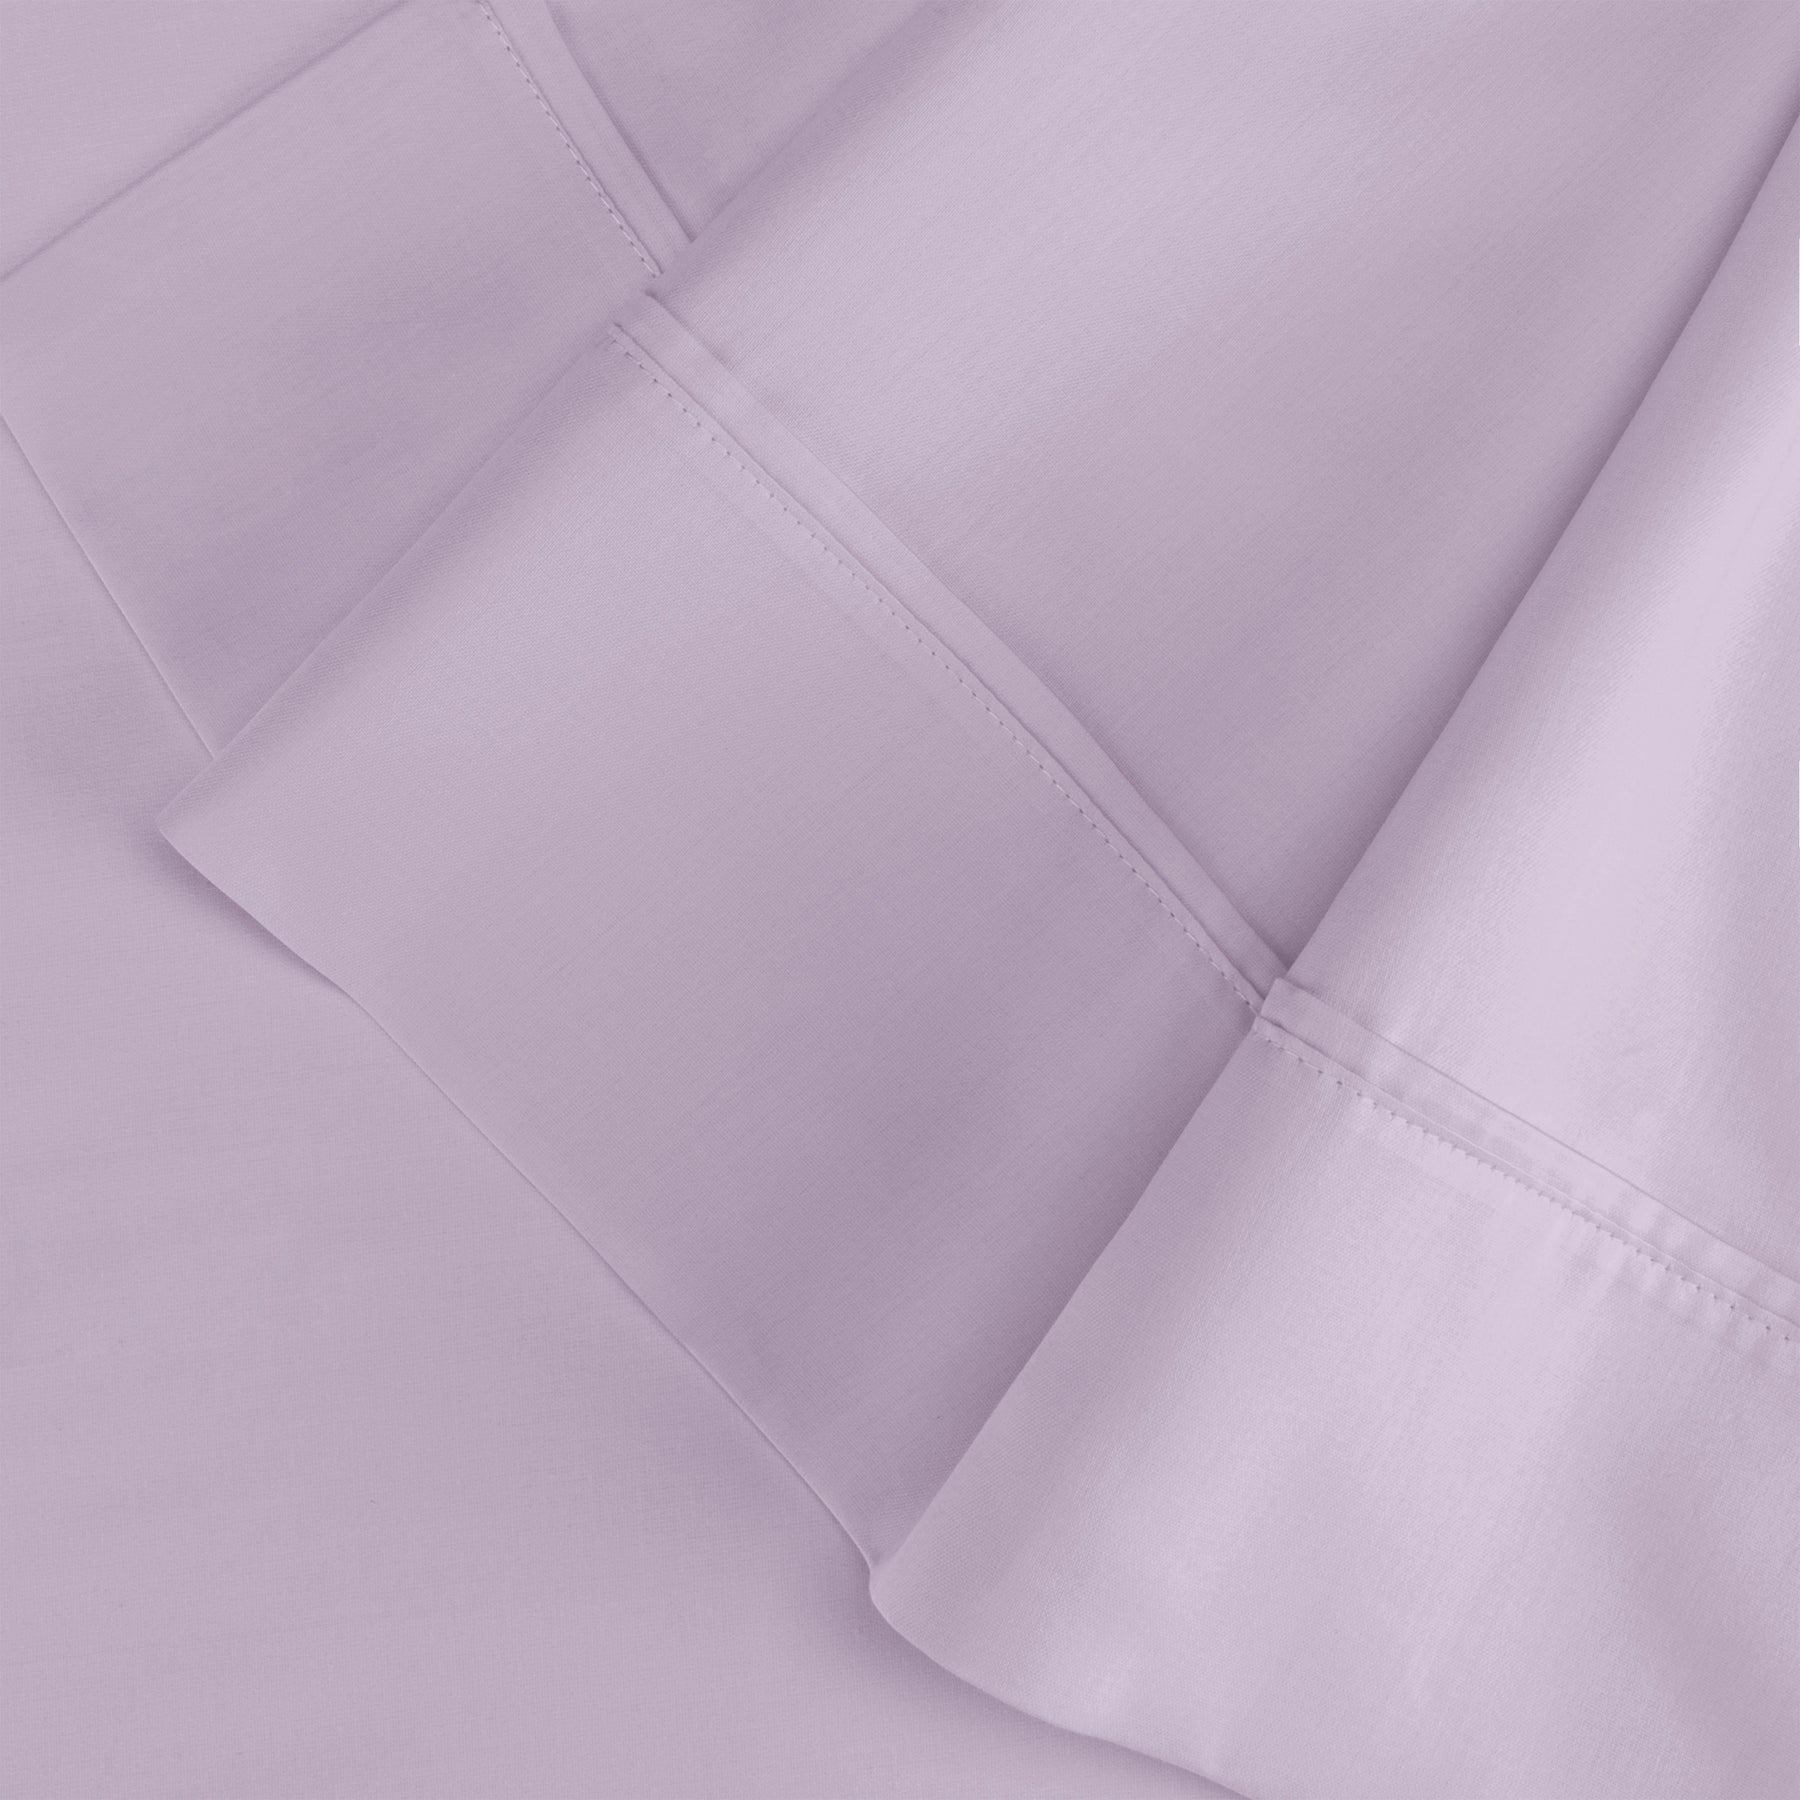 Superior Egyptian Cotton 300 Thread Count Solid Pillowcase Set - Lavender